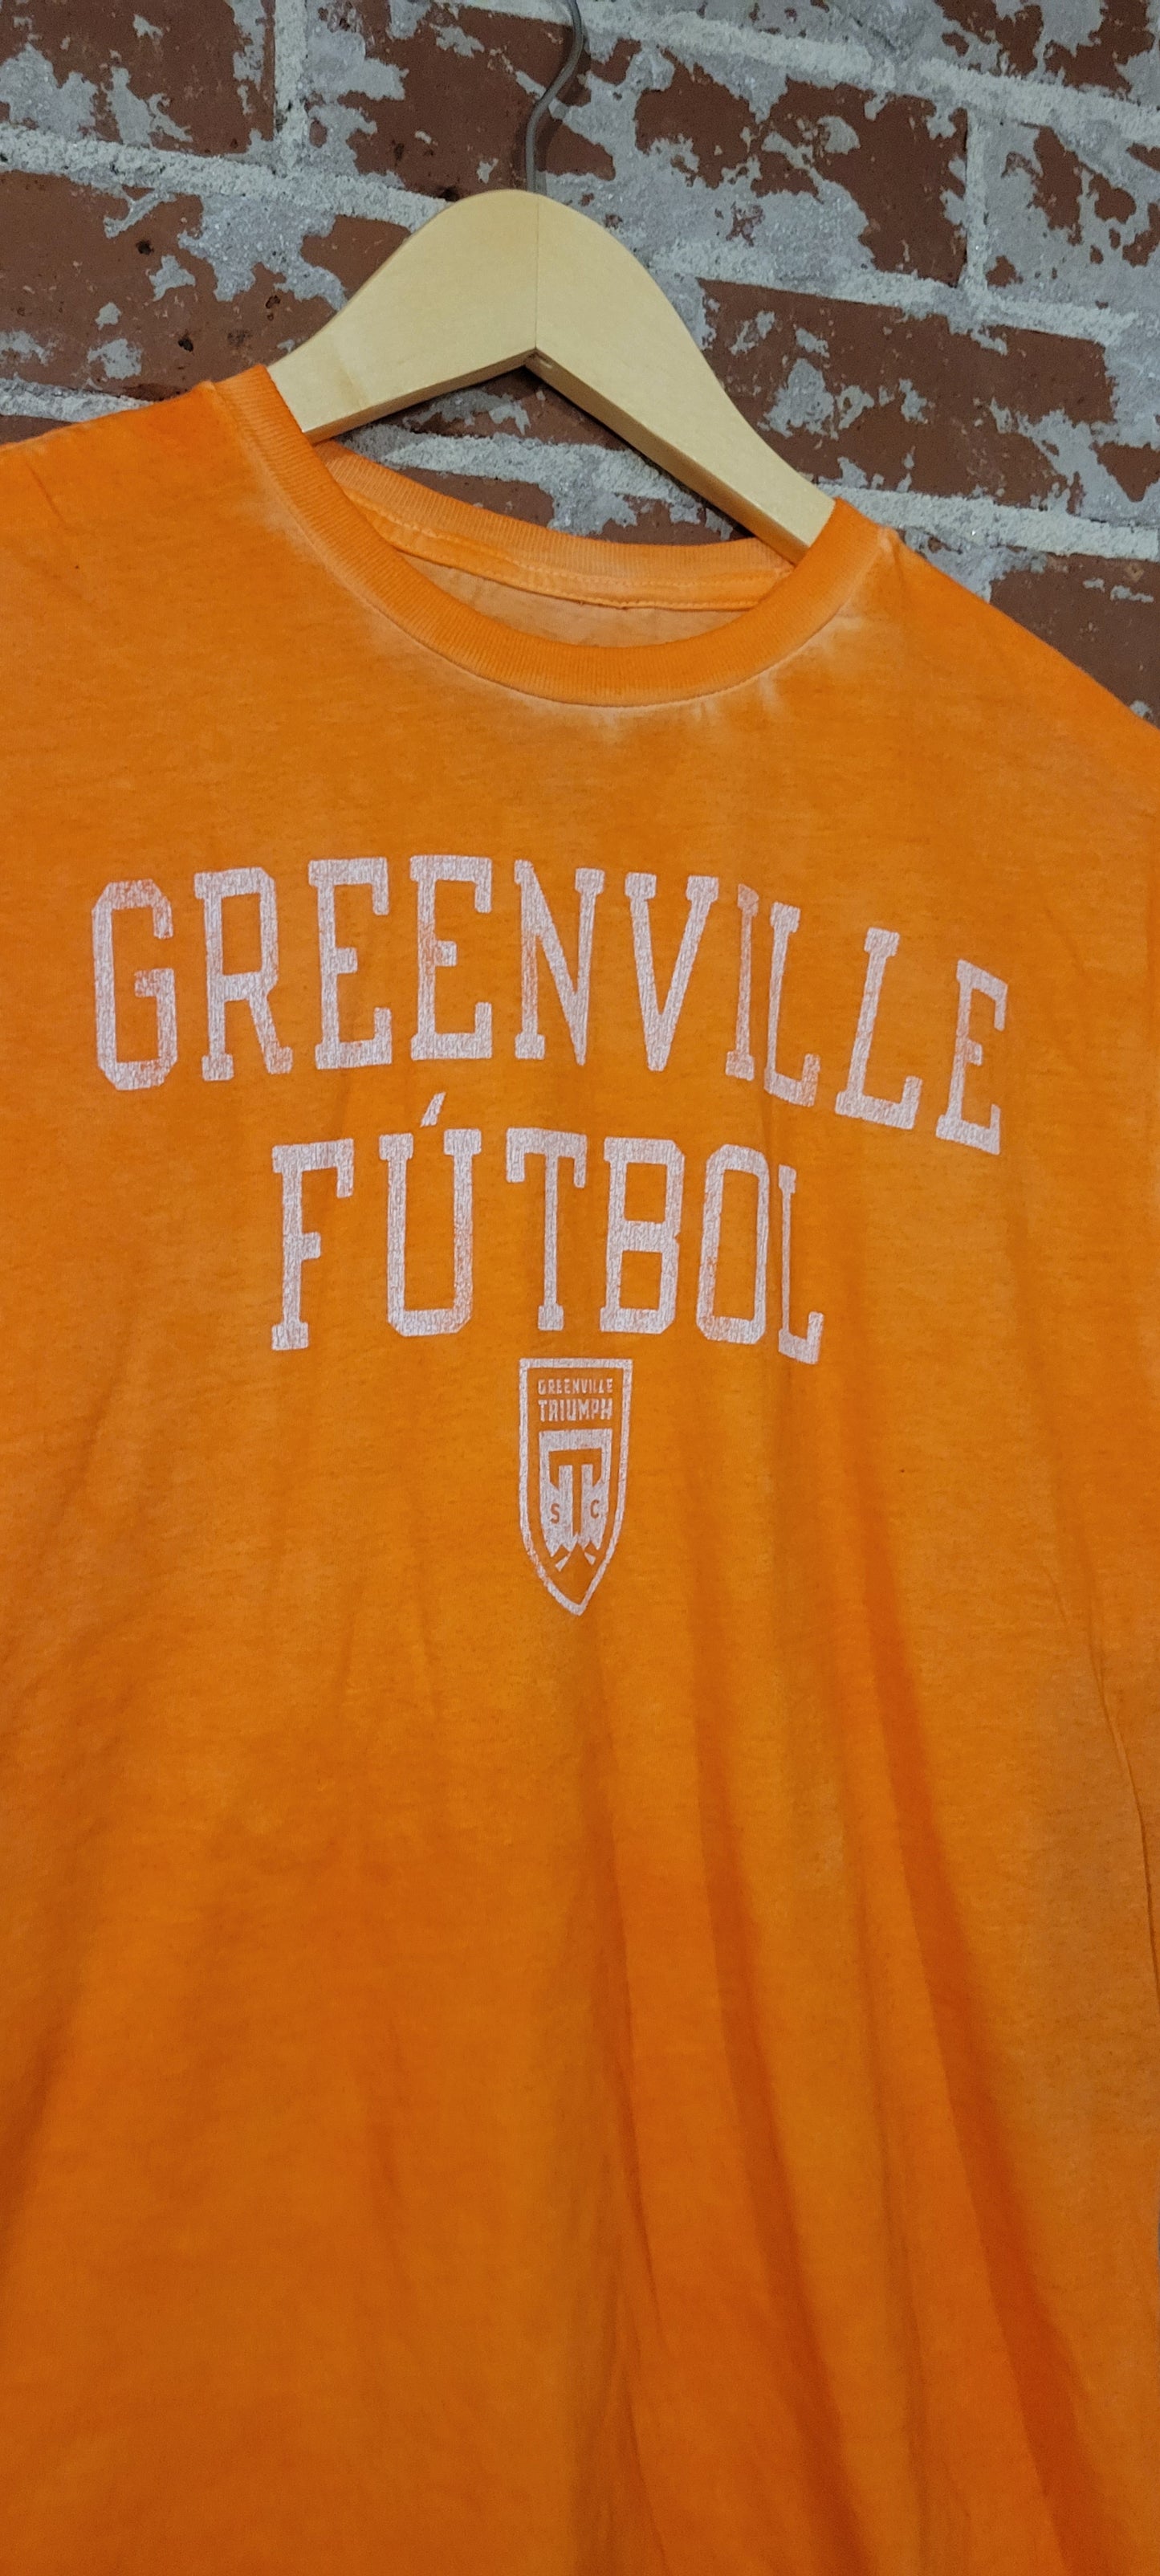 Greenville Futbol Stacked Tee, Orange